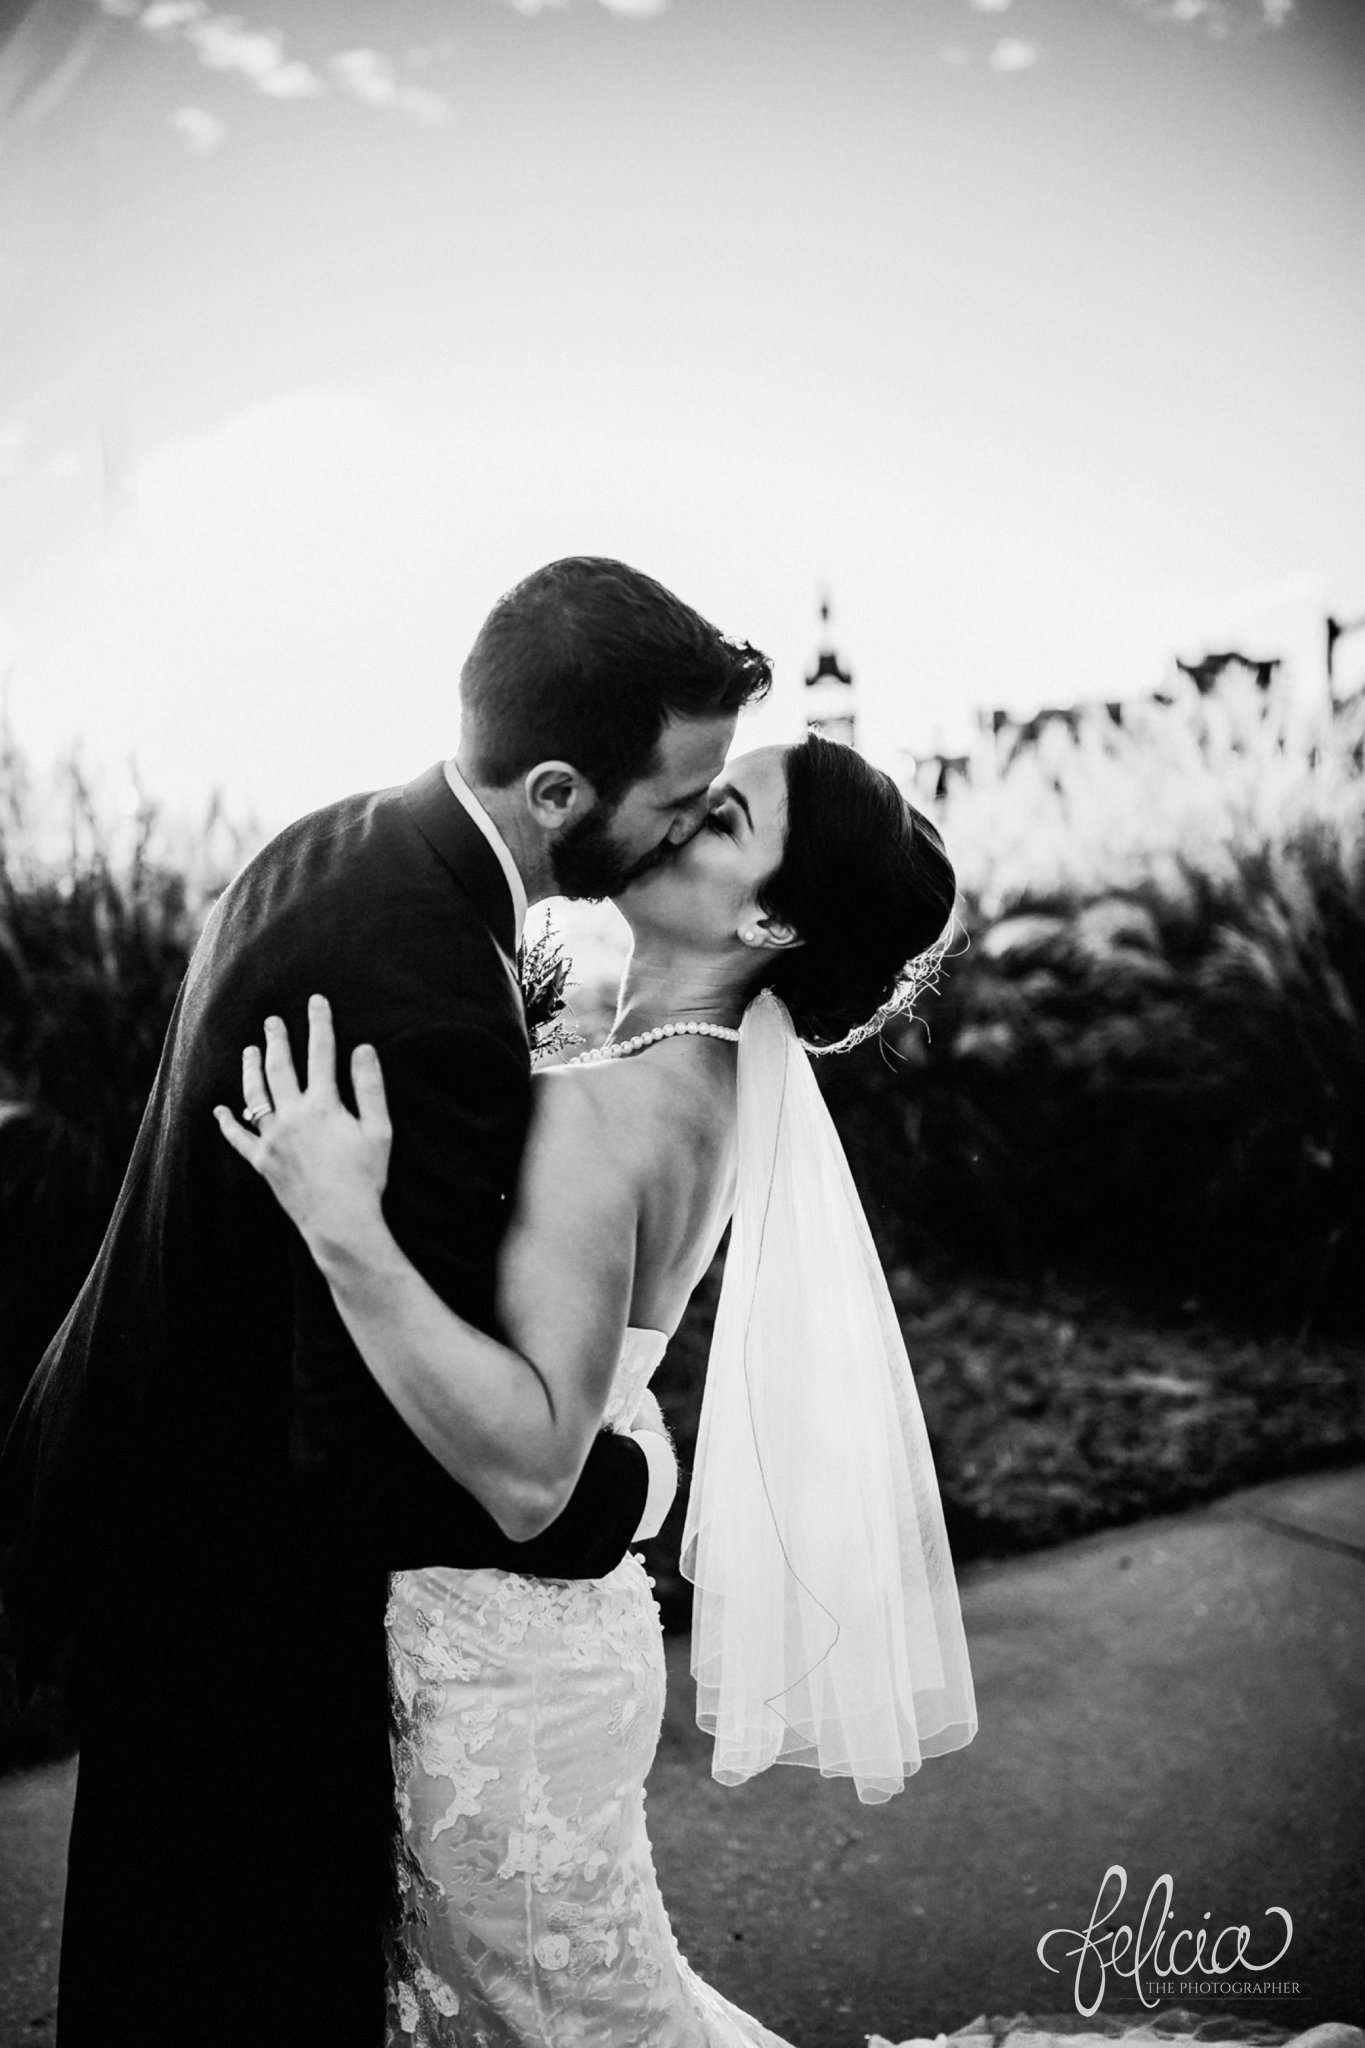 images by feliciathephotographer.com | wedding photographer | kansas city | portrait | bride and groom | pearls | kiss | joy | smokey eye | black and white | 